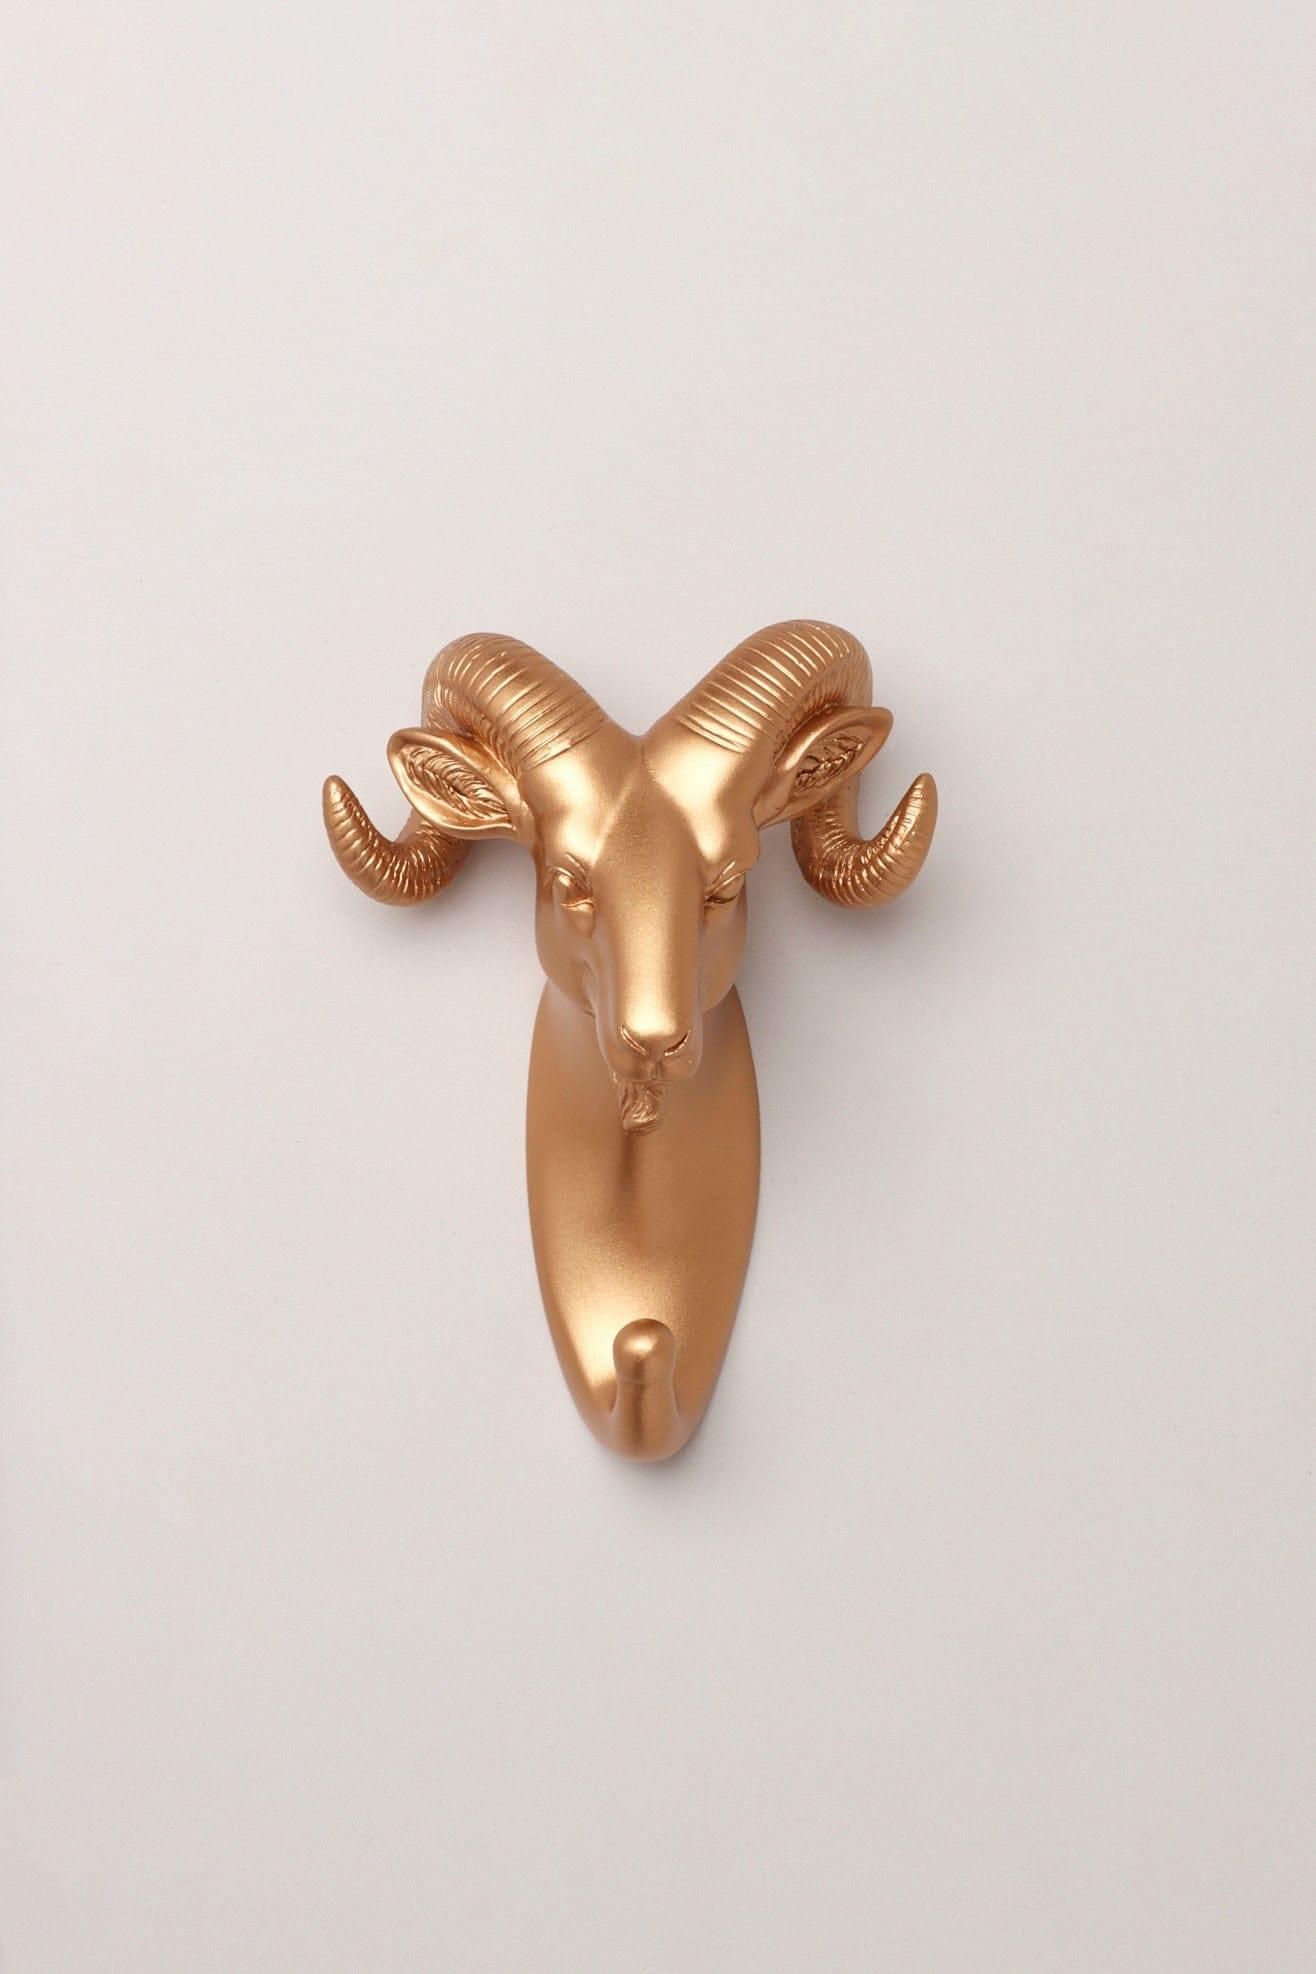 G Decor All Hooks Goat Ornamental Animal Heads Wildlife Bronze Gold Solid Resin Wall Organizer Coat Hook